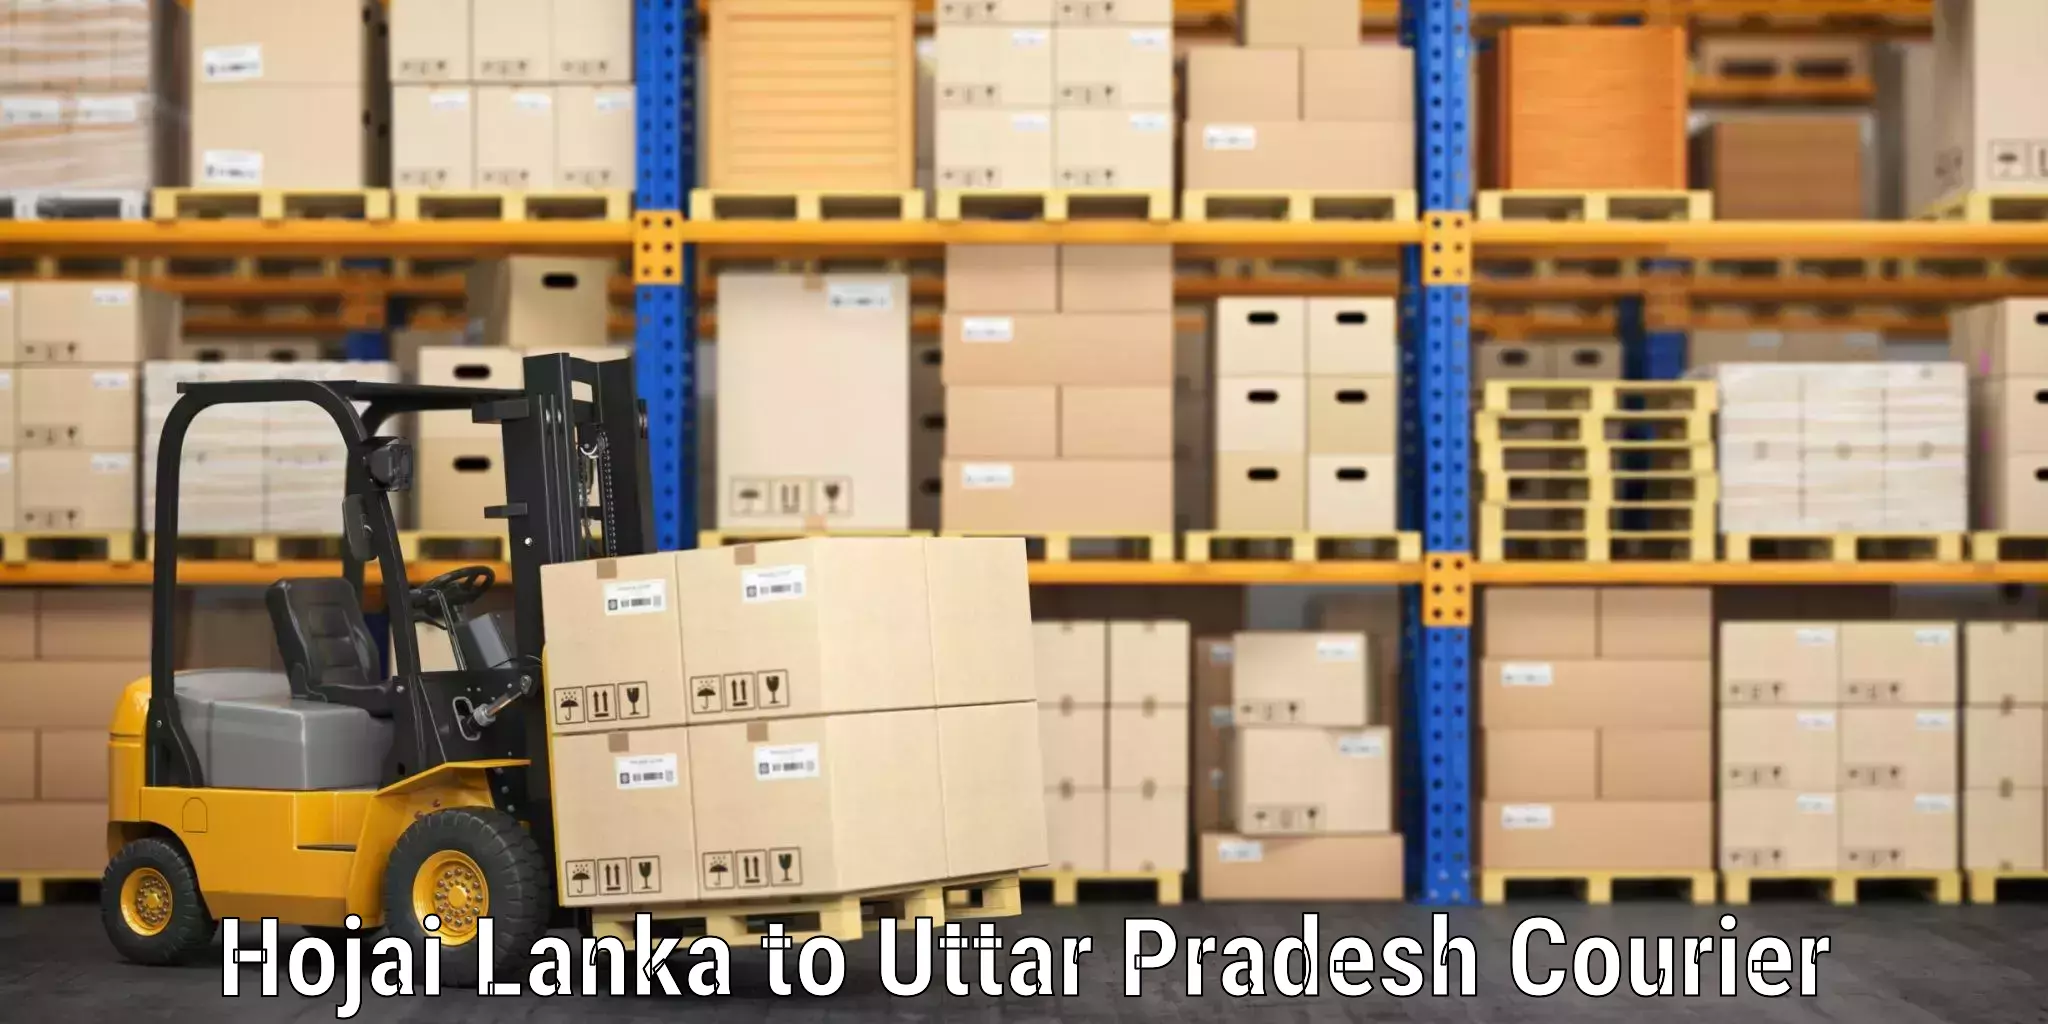 Luggage transport company in Hojai Lanka to Moradabad